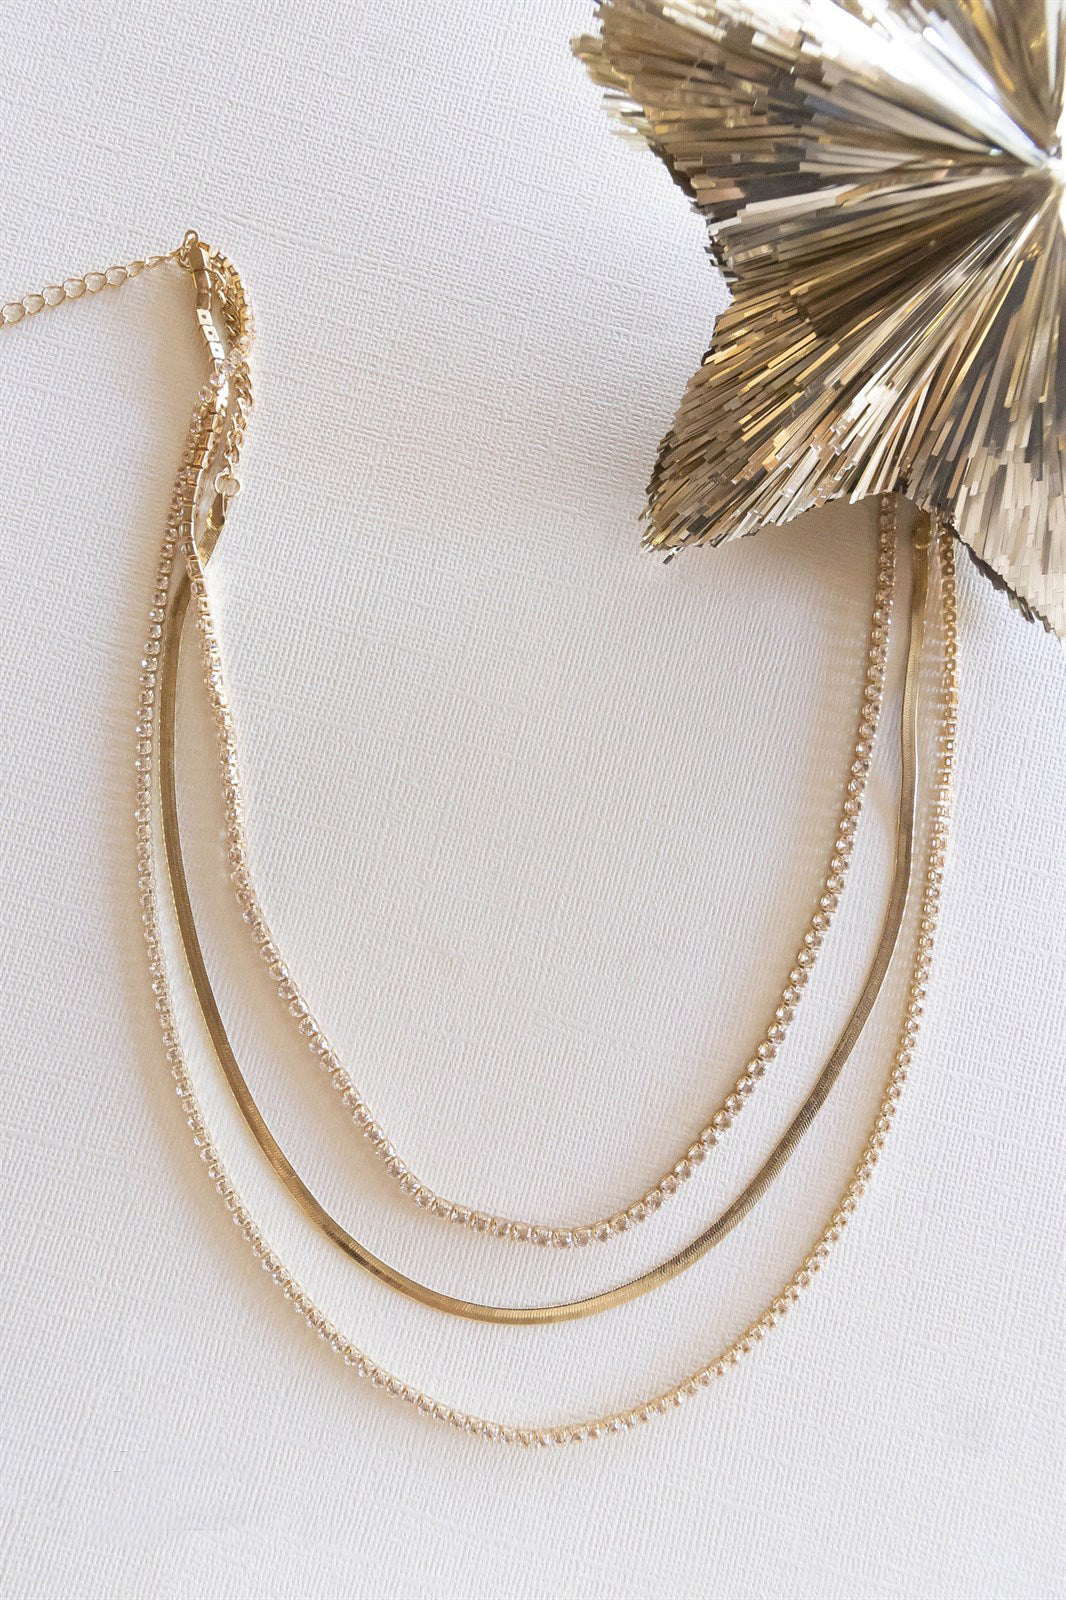 Amari Short Gold Layering Necklace | Delicate Chain Necklaces | Minimalist Gold Chain Necklace